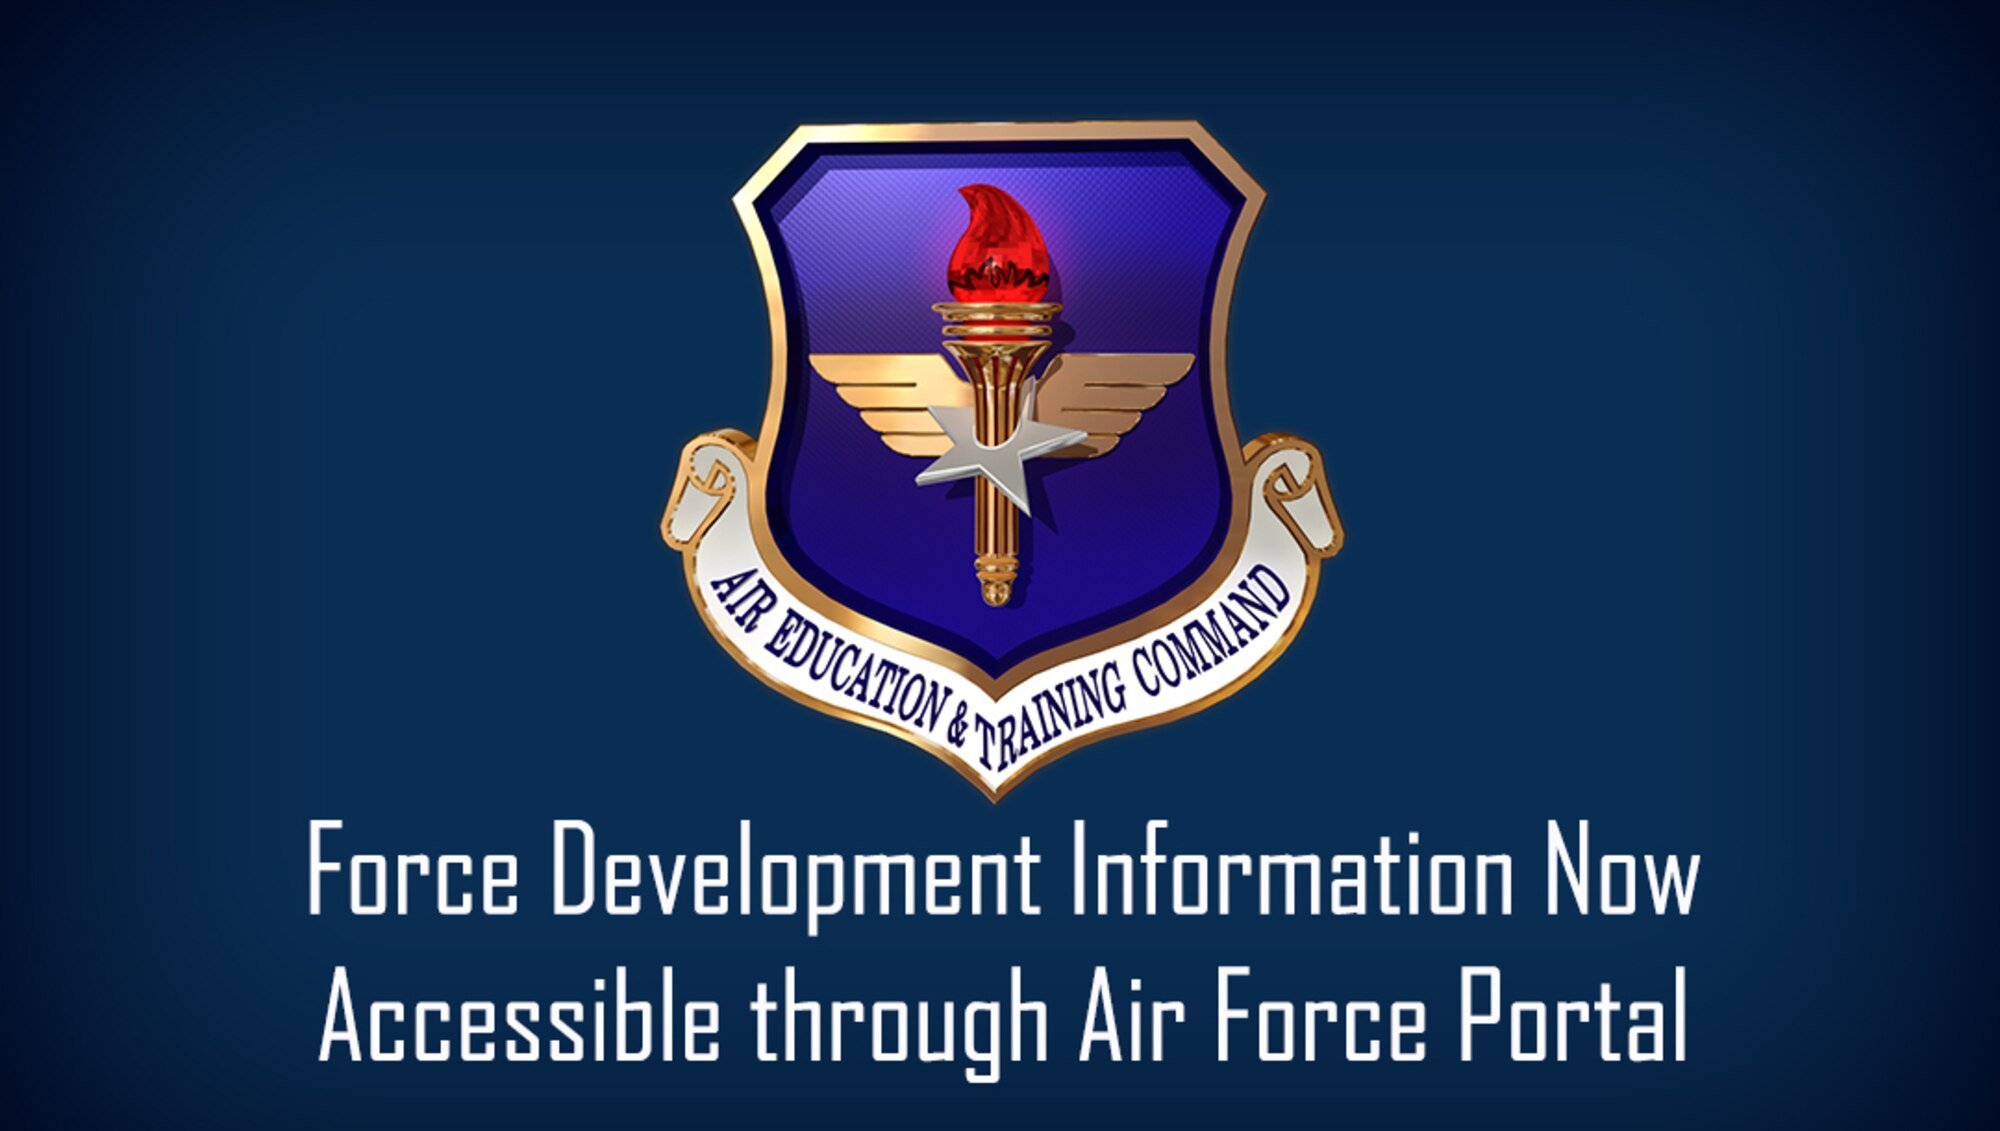 AETC logo on blue background